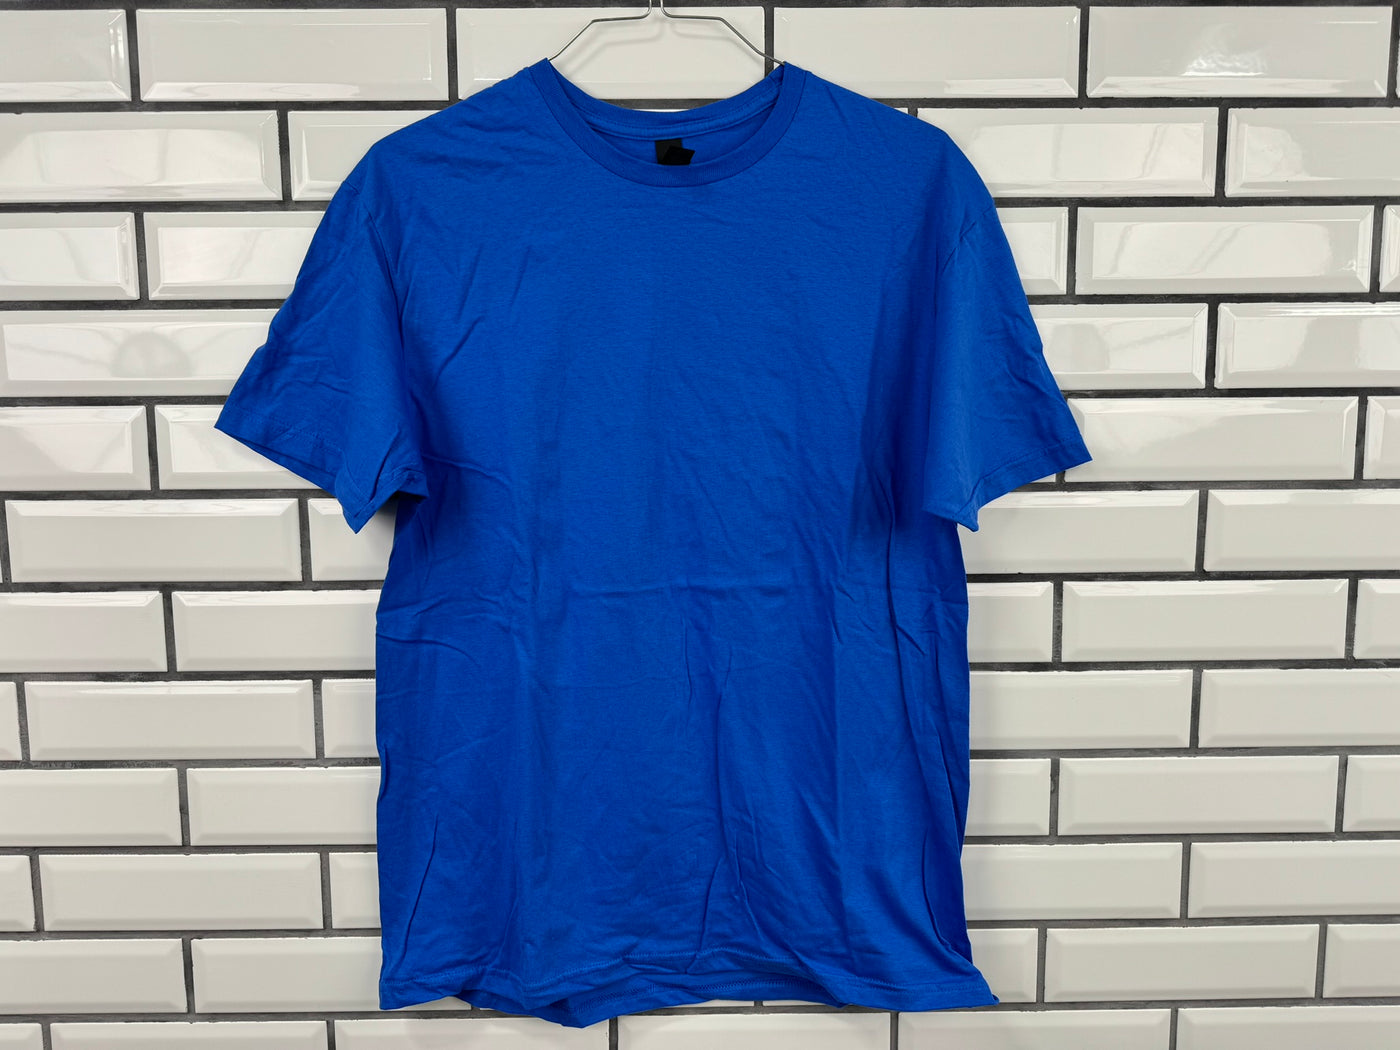 J&J Blue with Orange Back Logo Gilden Soft Style Short Sleeved Shirt with Free Shipping